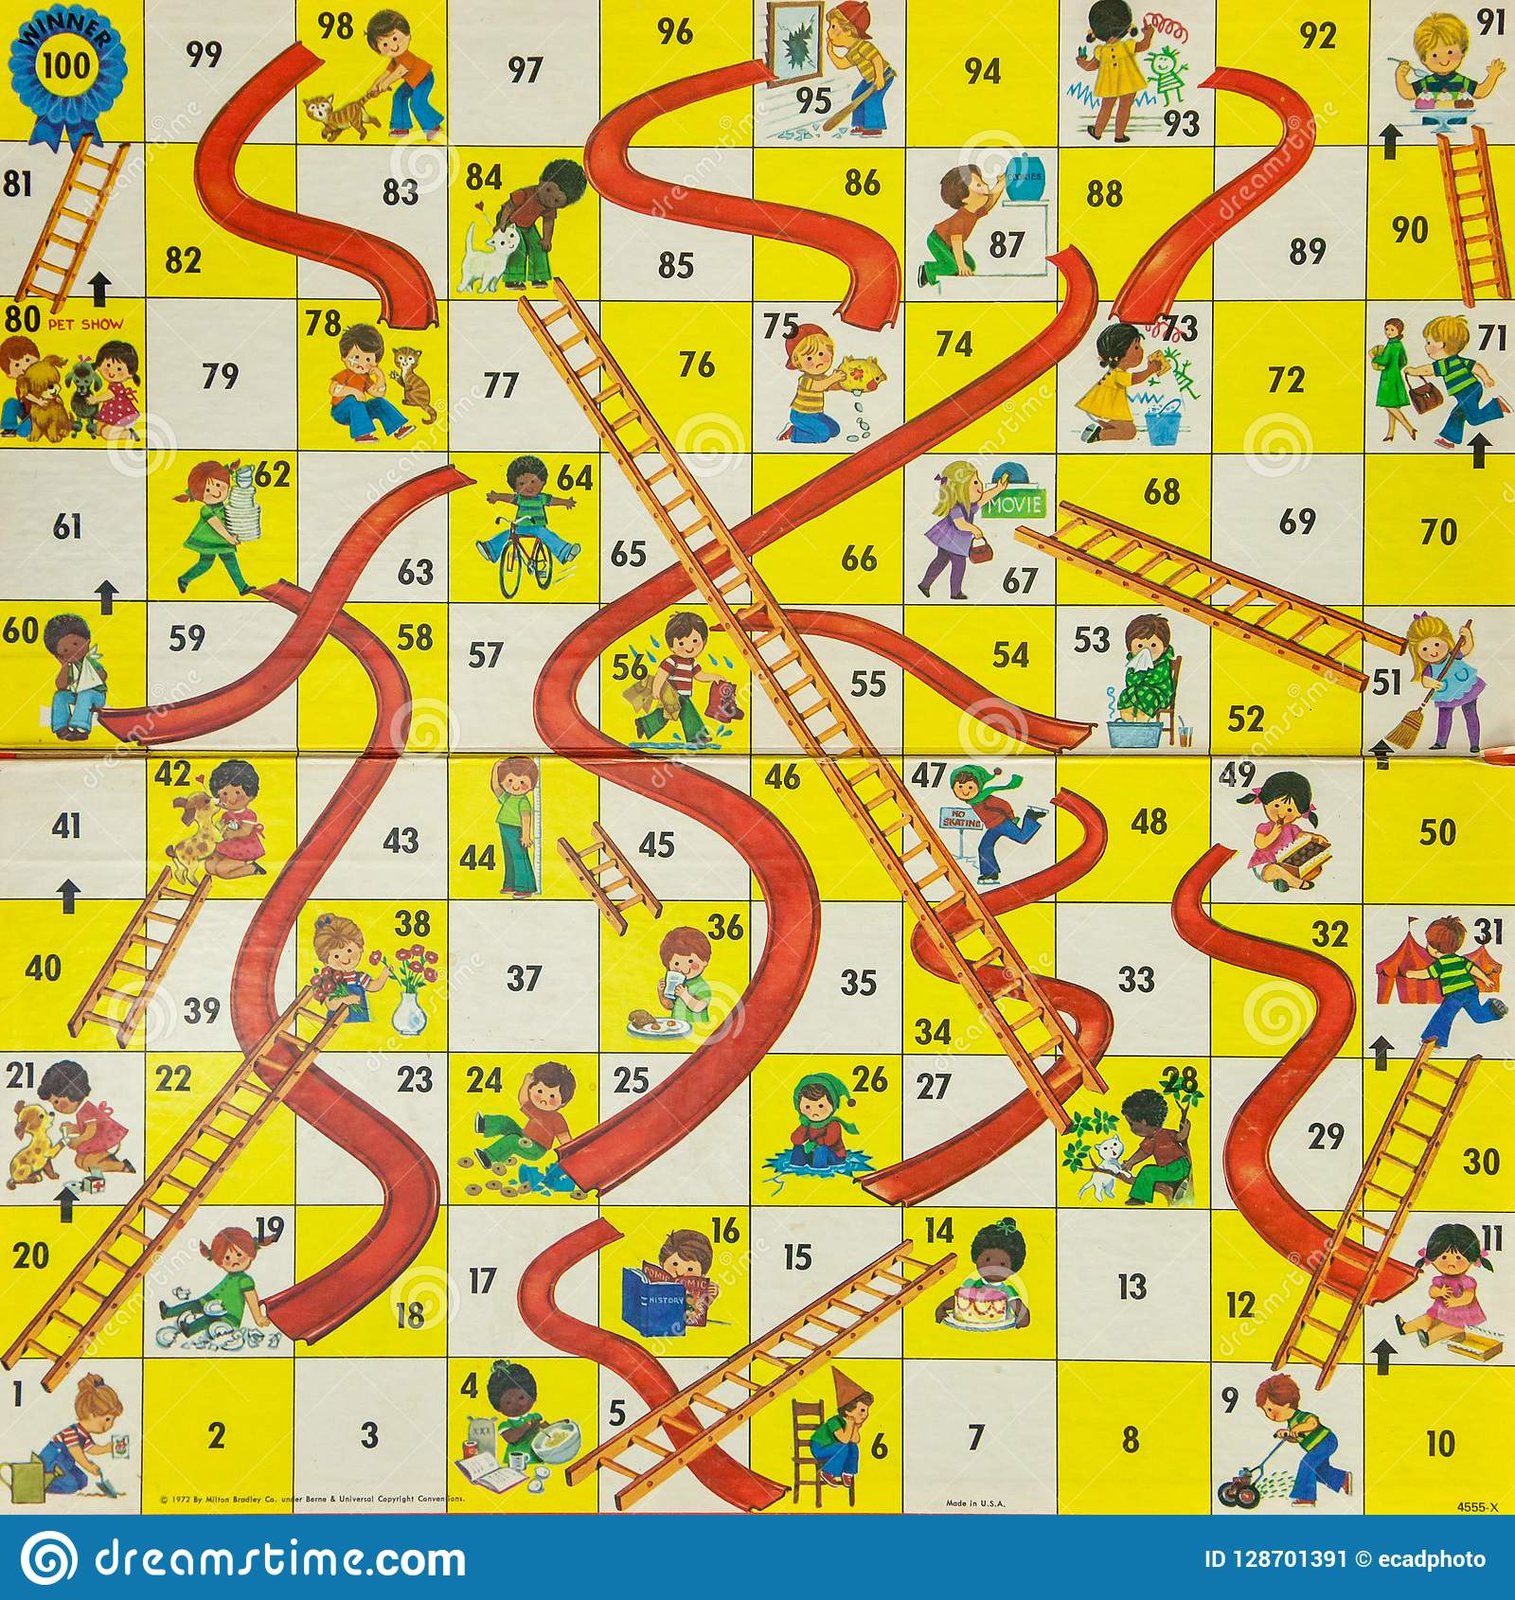 s-board-games-chutes-ladders-woodbridge-new-jersey-october-circa-game-shown-128701391.jpg